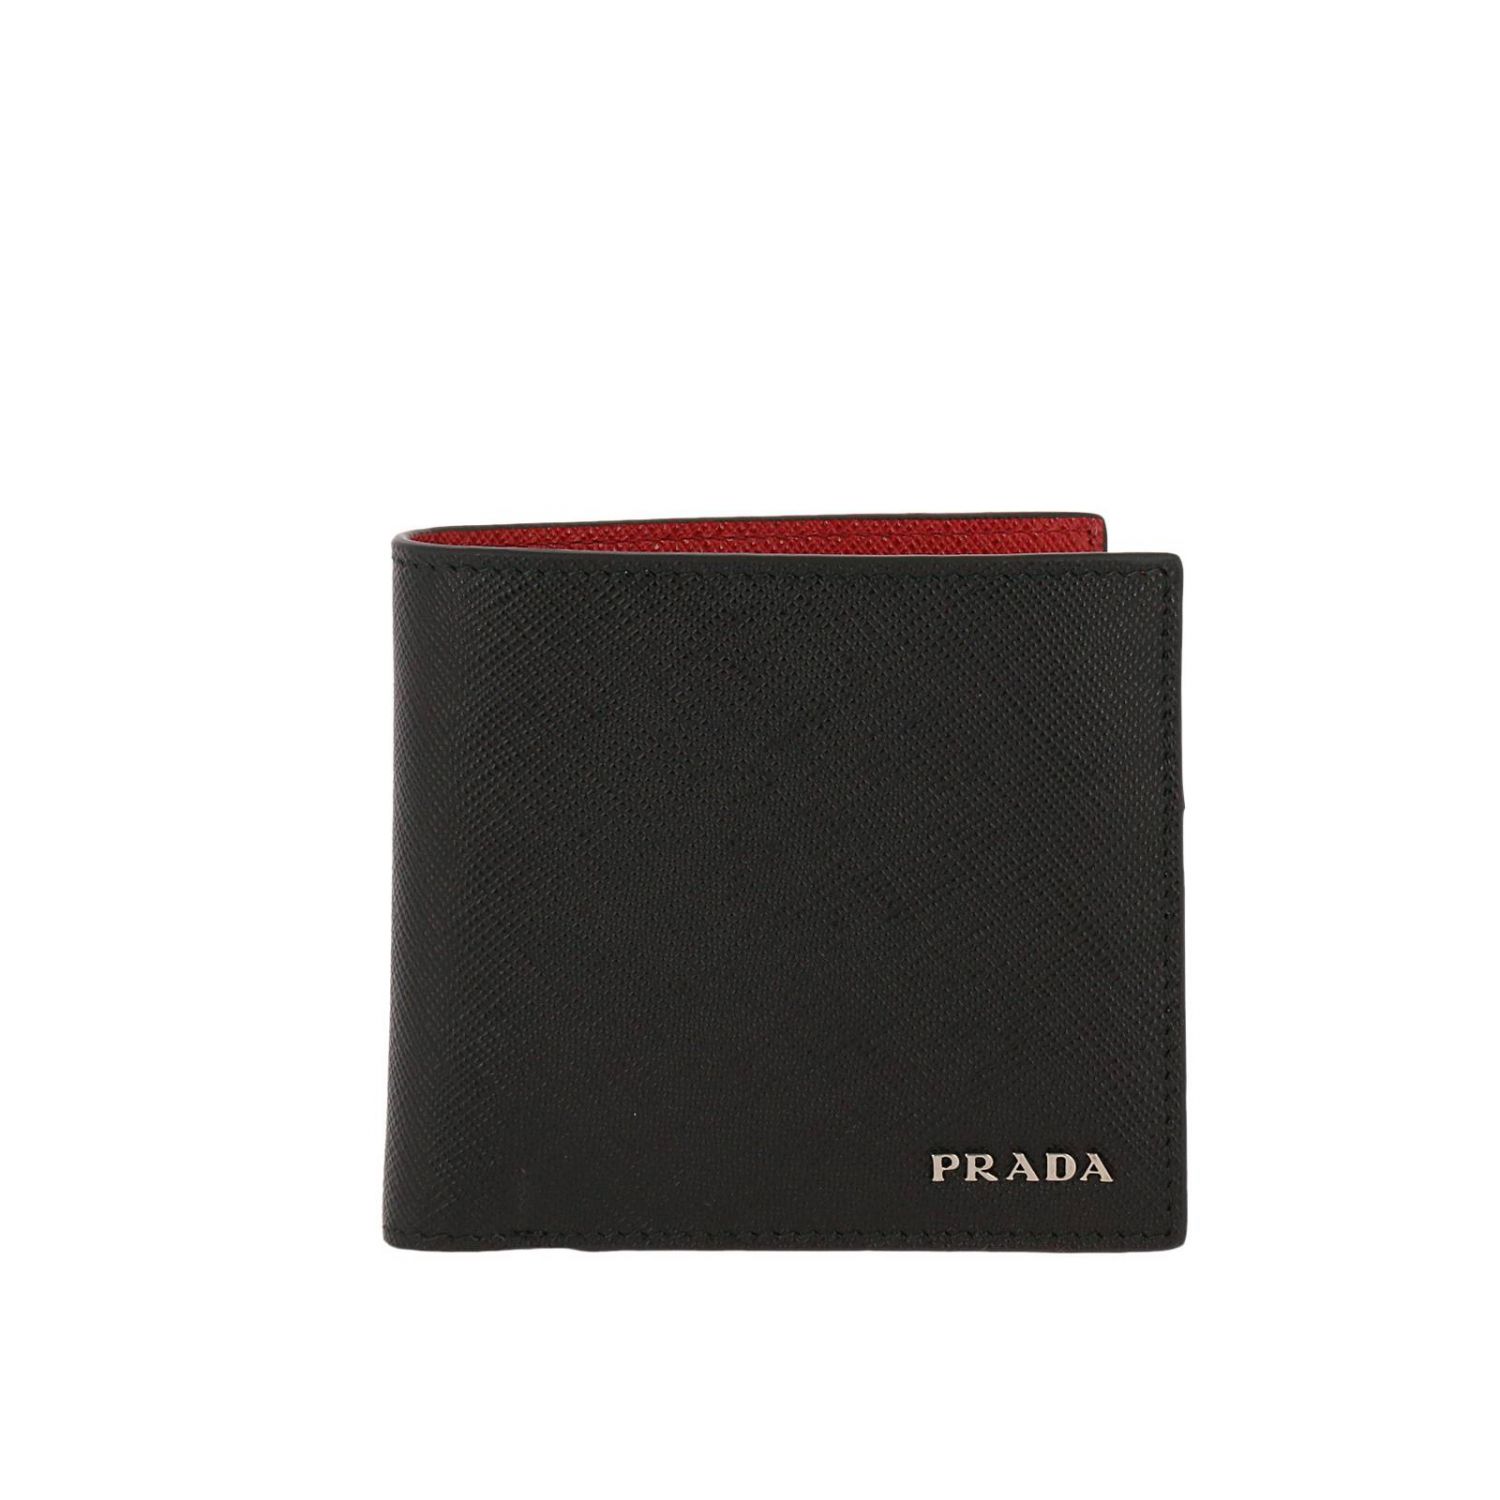 Wallet men Prada | Wallet Prada Men Black | Wallet Prada 2MO912 C5S ...